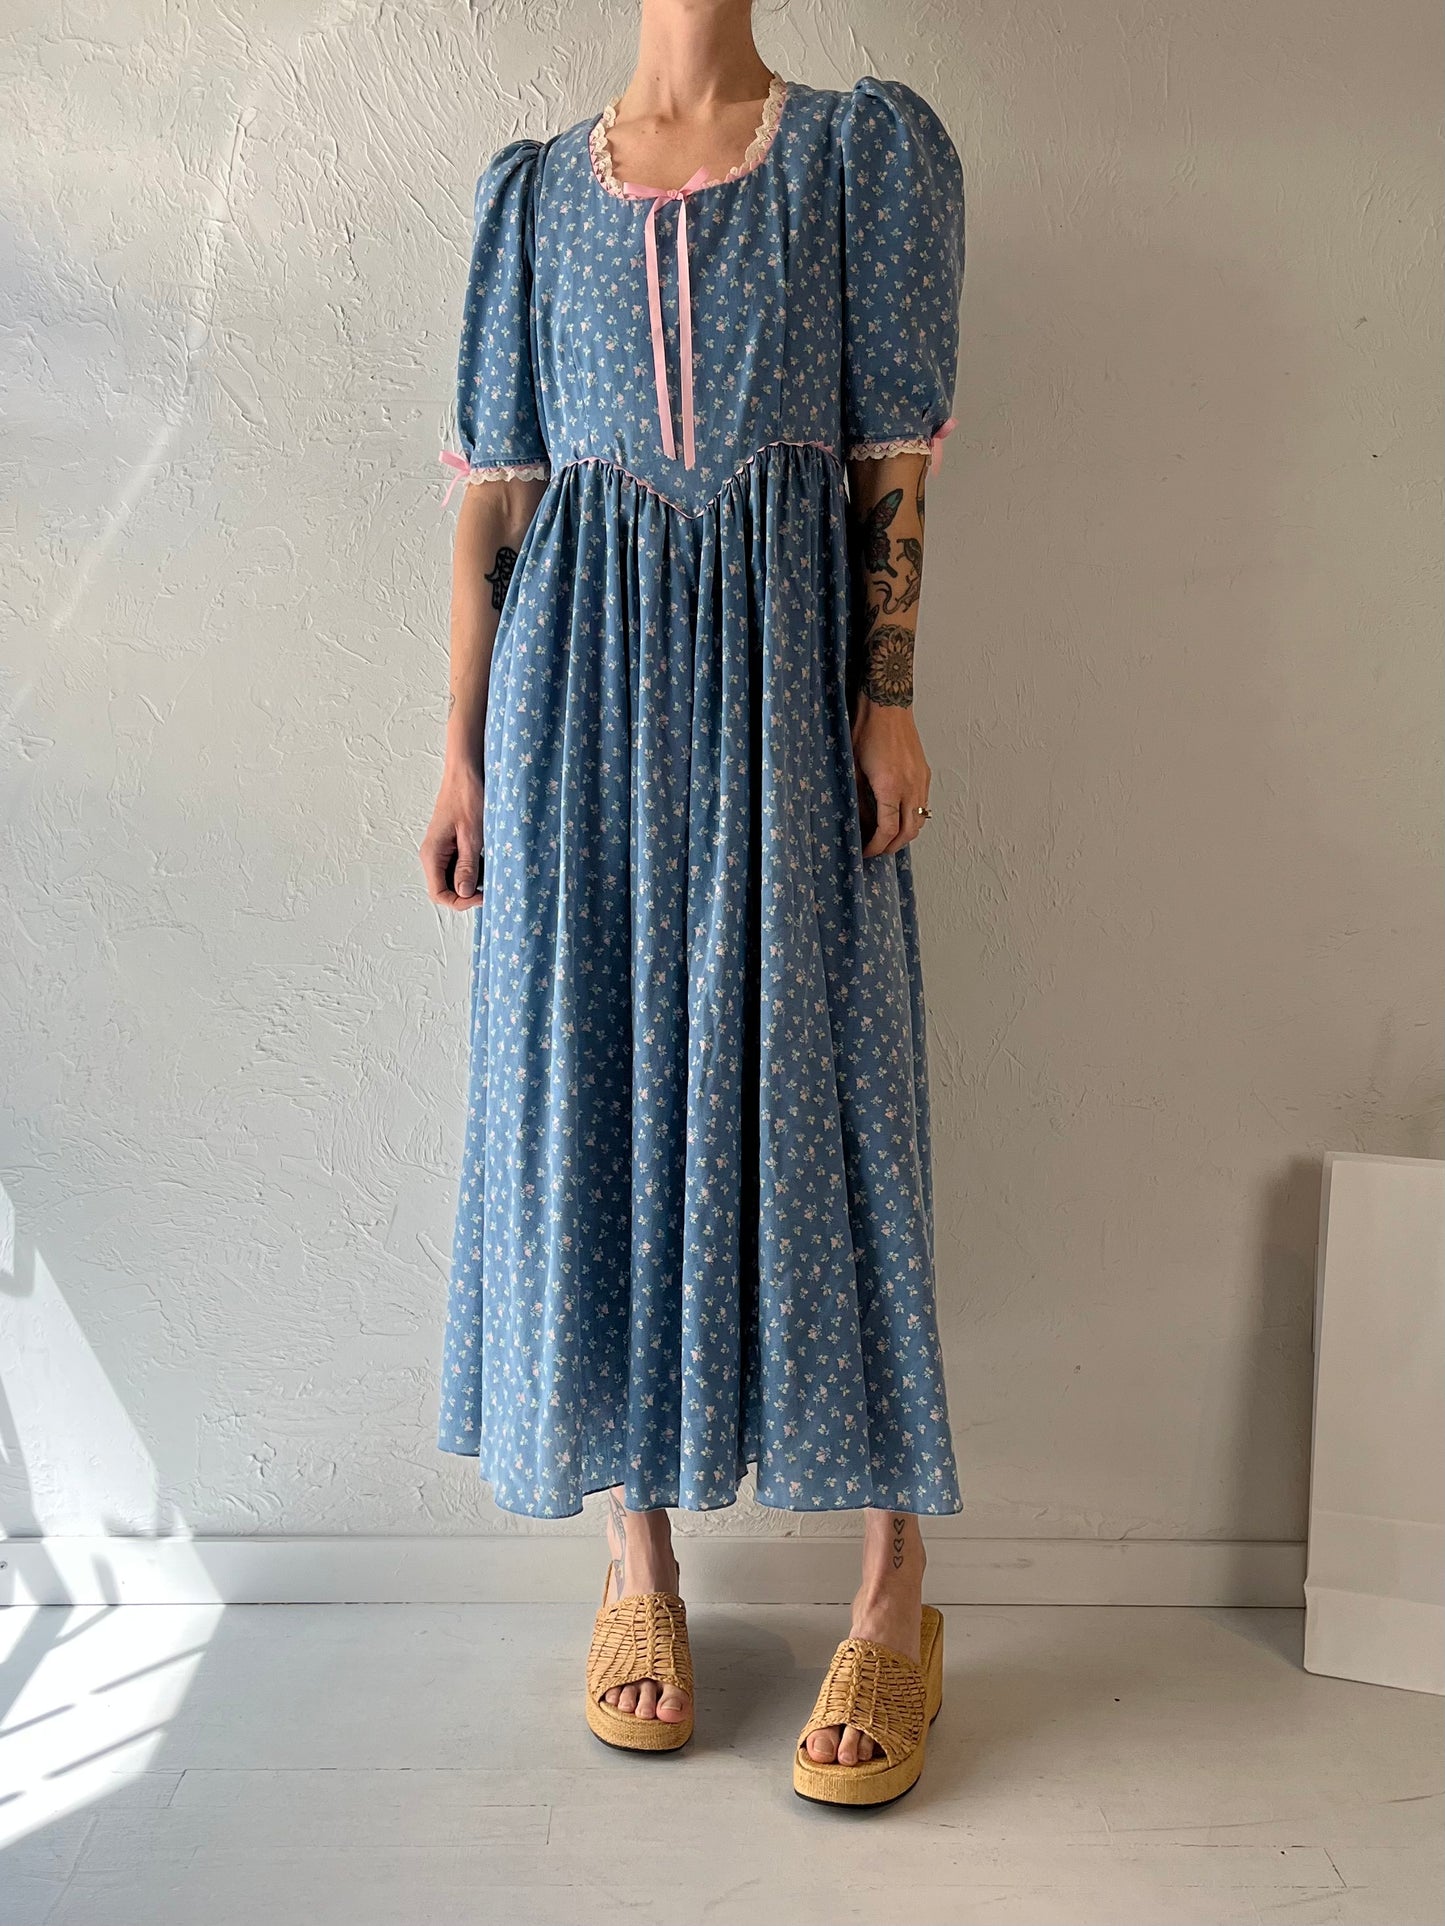 Vintage Handmade Blue Floral Dress / Medium